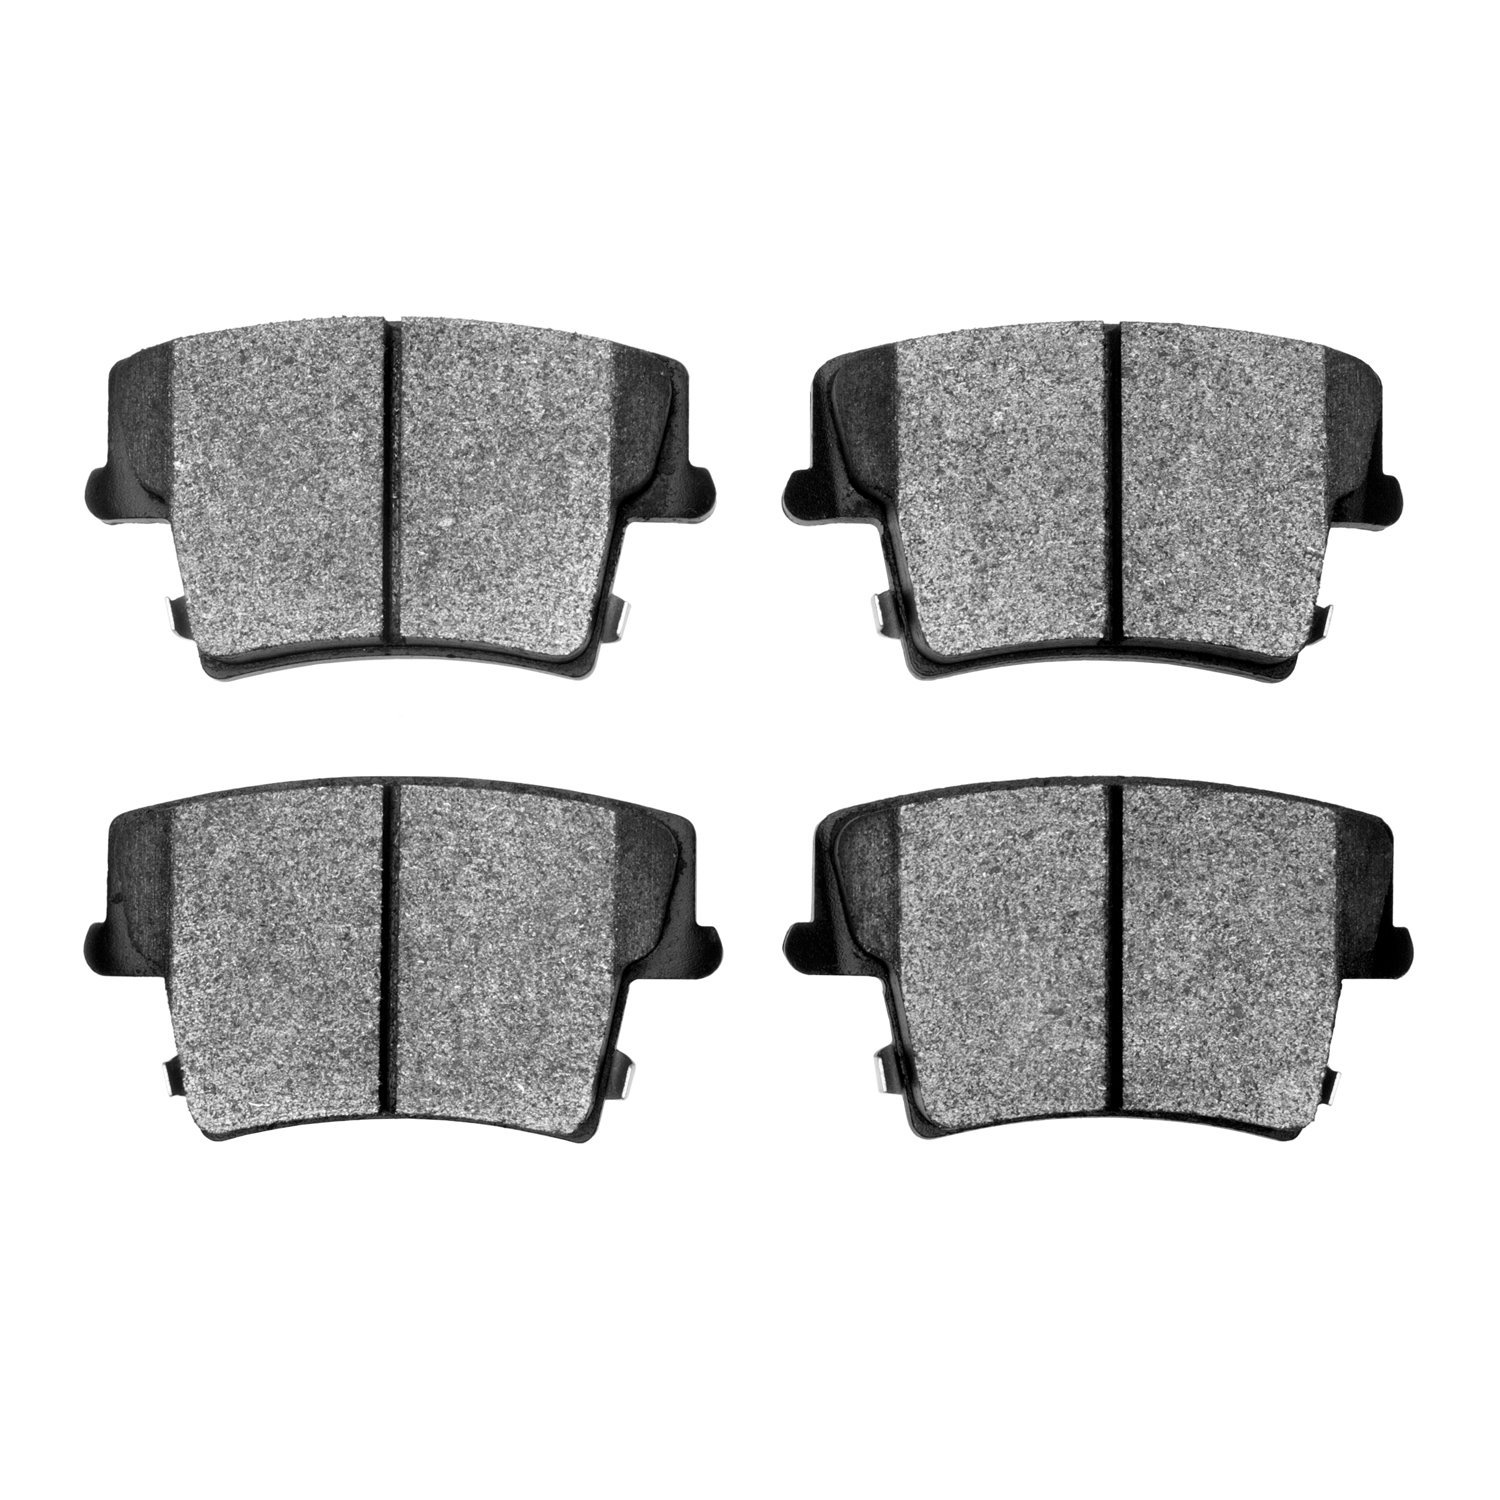 Semi-Metallic Brake Pads, Fits Select Mopar, Position: Rear